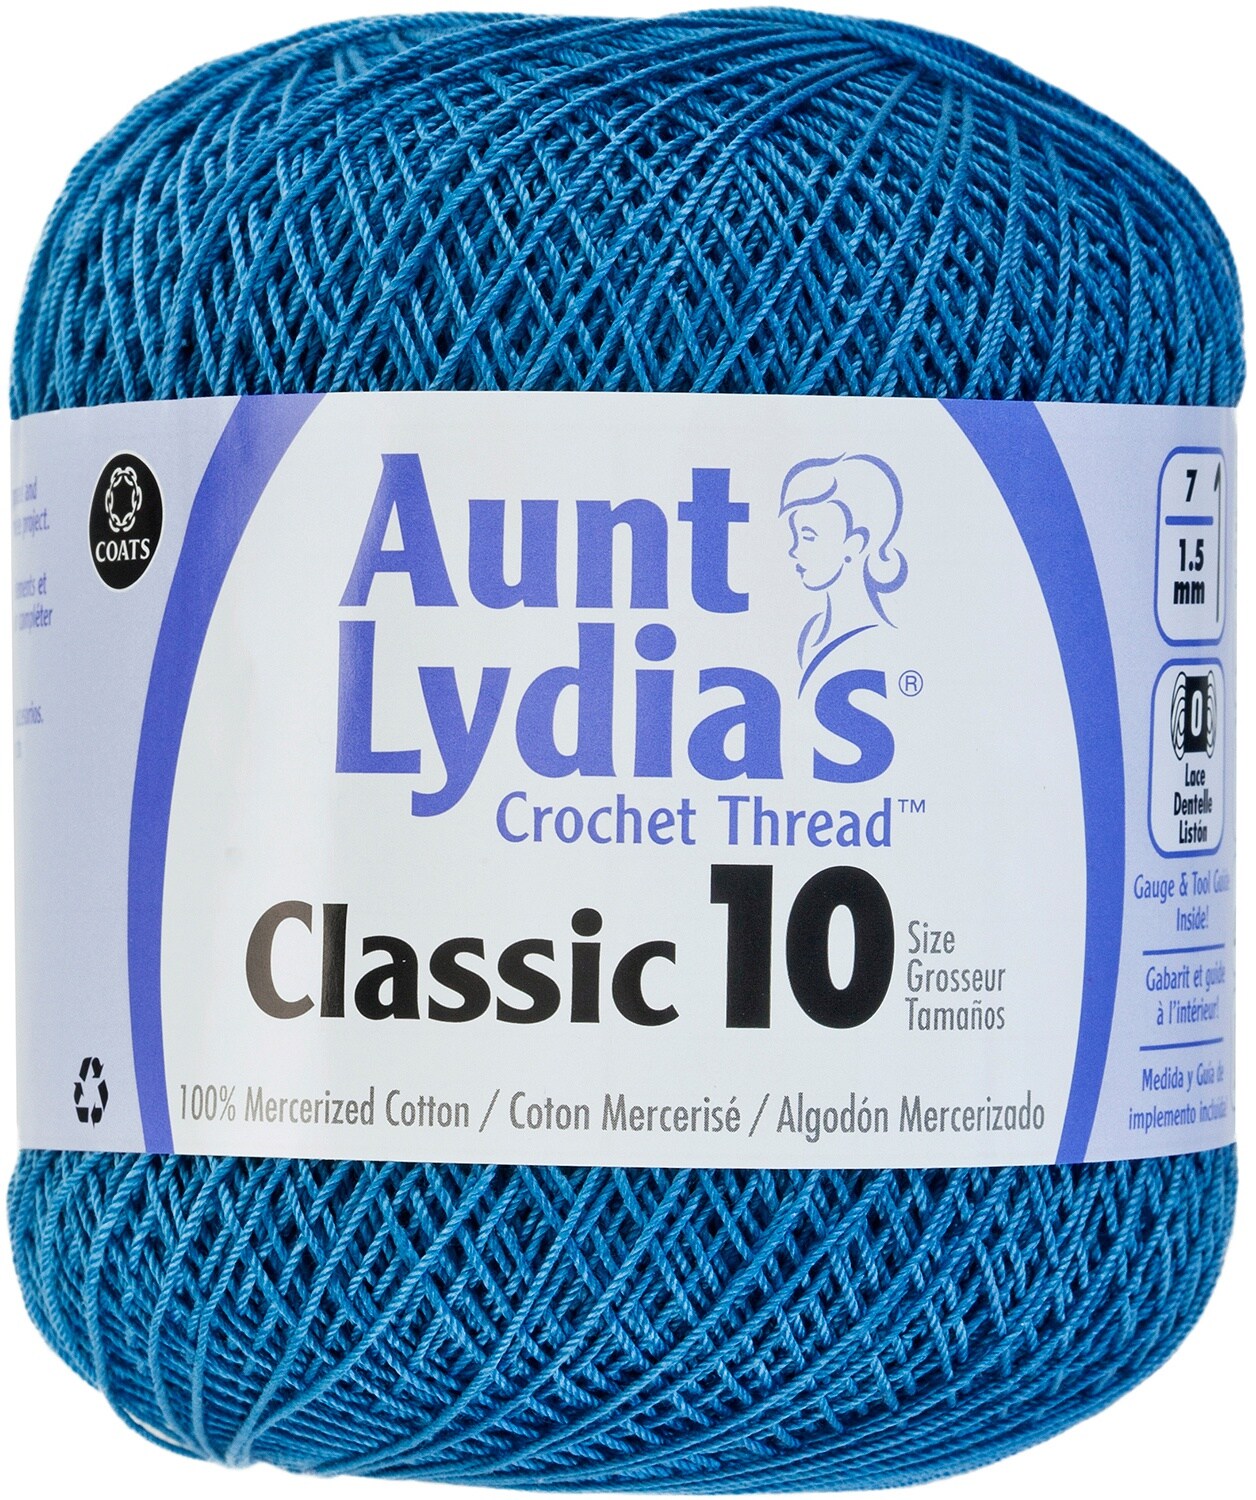 Aunt Lydia's Crochet Cotton Classic Jumbo Size 10, White